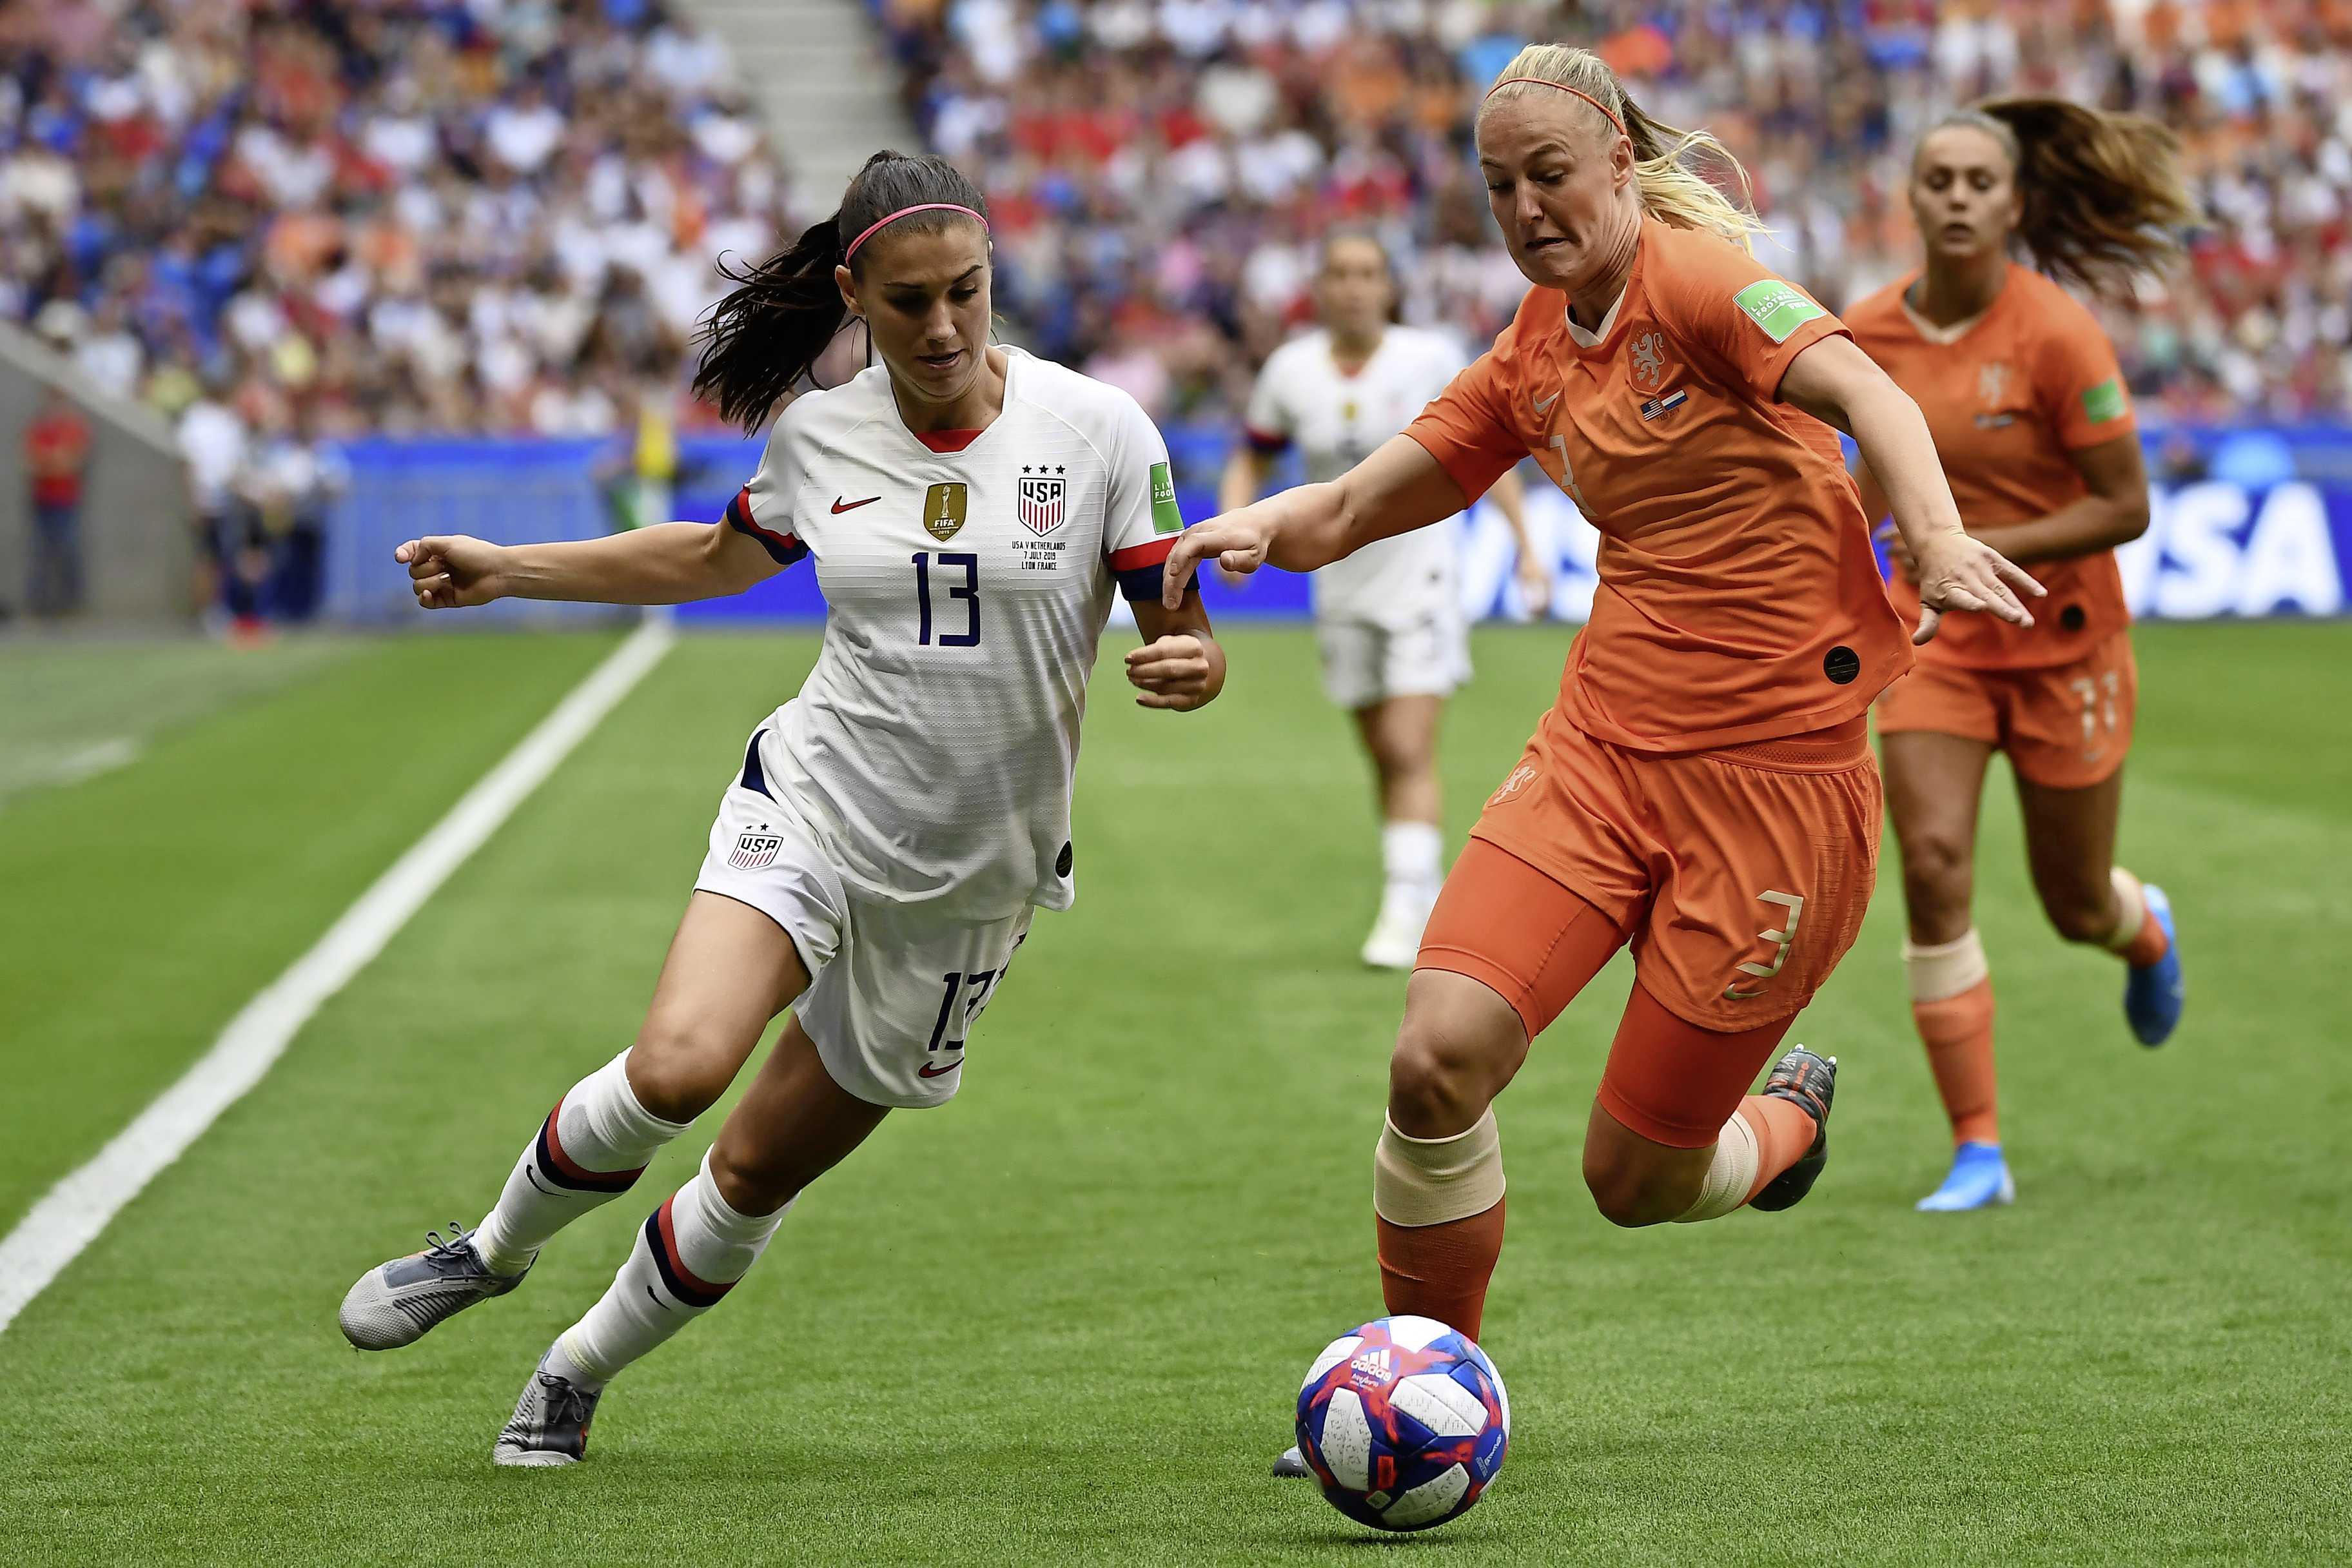 Amerika Bezorgt Oranje Leeuwinnen Enorme Kater In Wk Finale Voetbal Telegraaf Nl